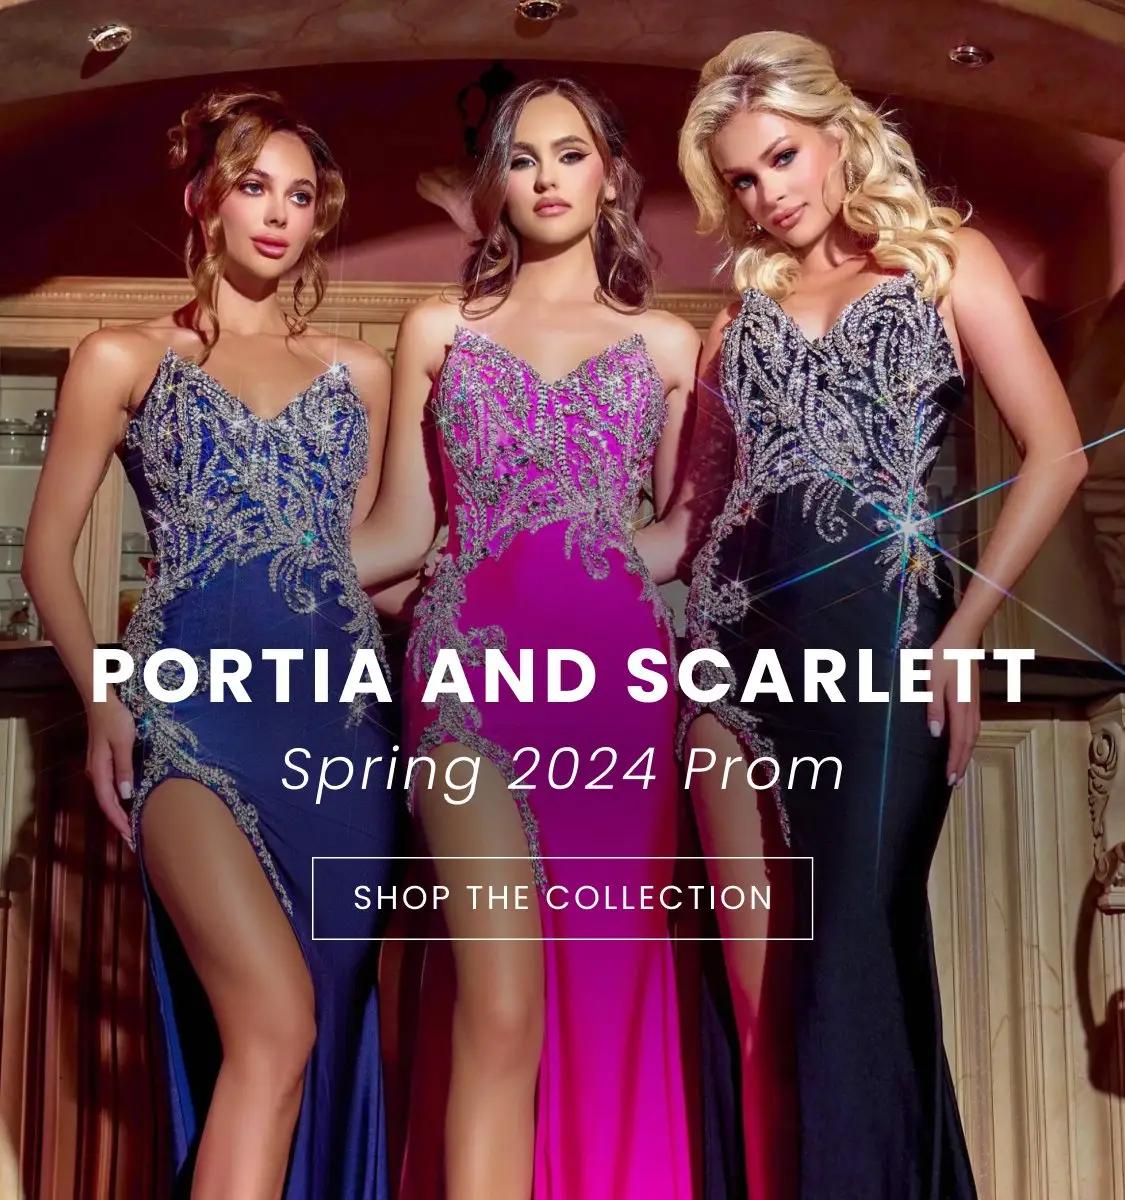 Portia and Scarlett 2024 Prom Banner Mobile